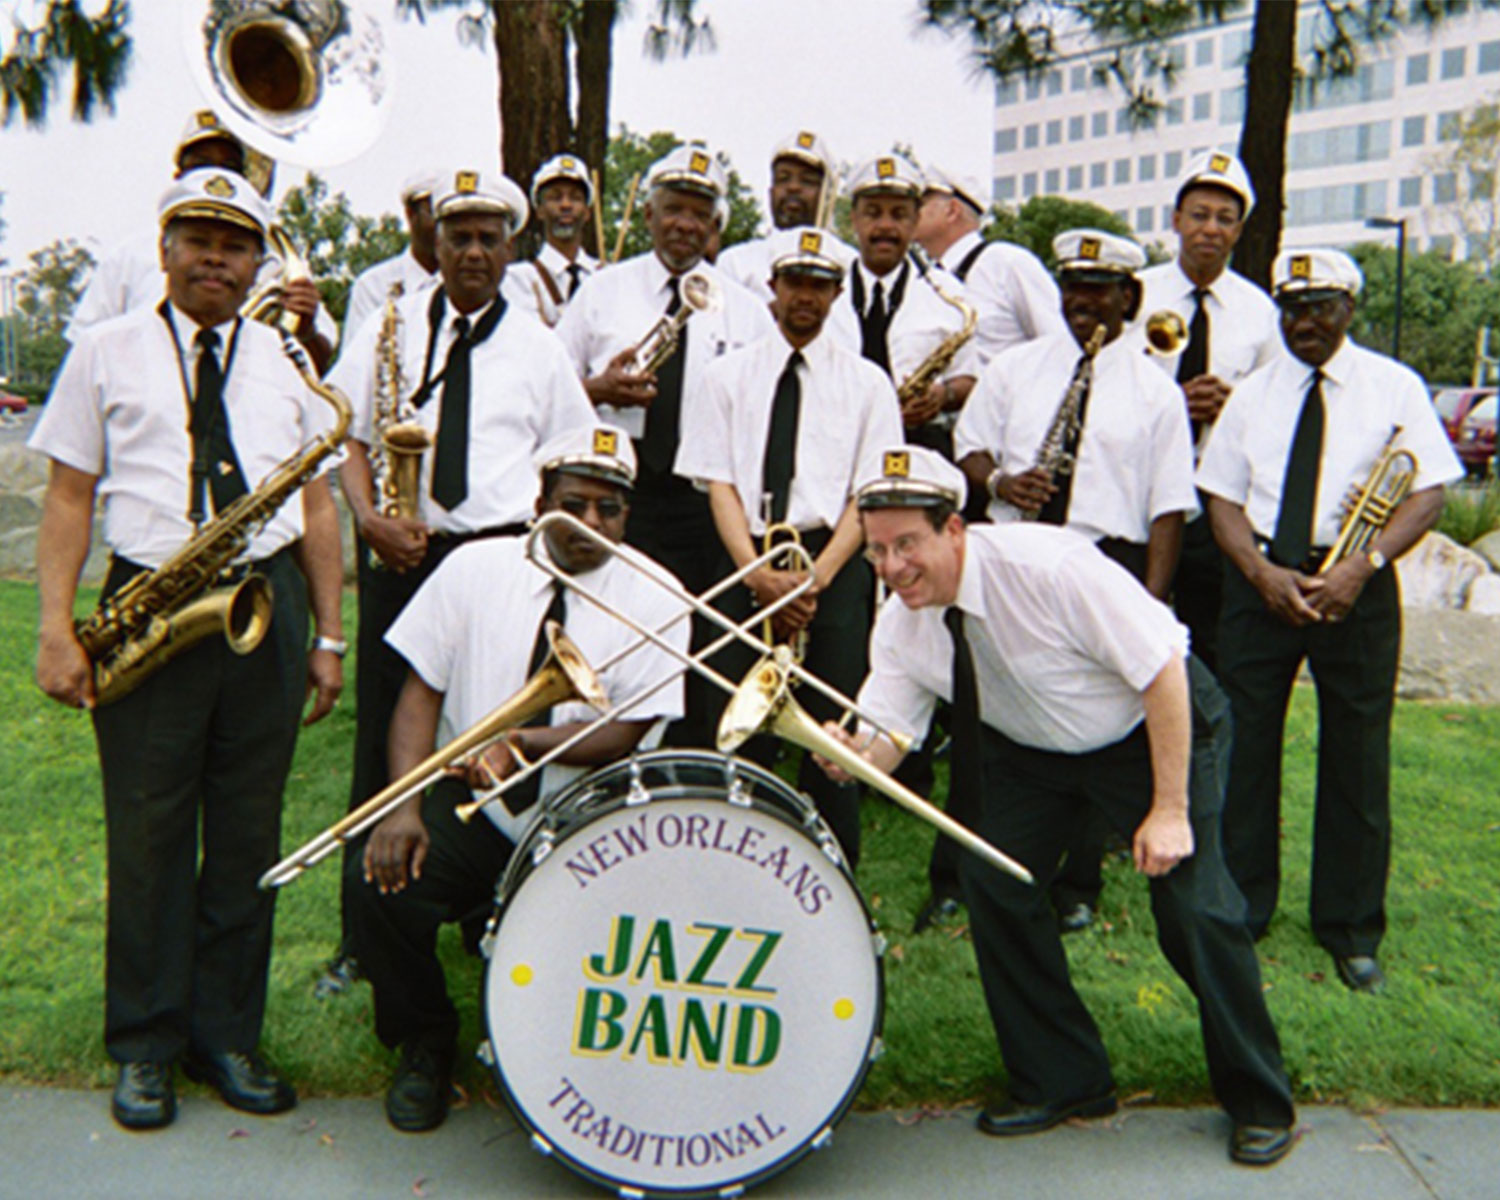 Песни джаз банды. Джаз бэнд. Новый Орлеан джаз. Creole Jazz Band.